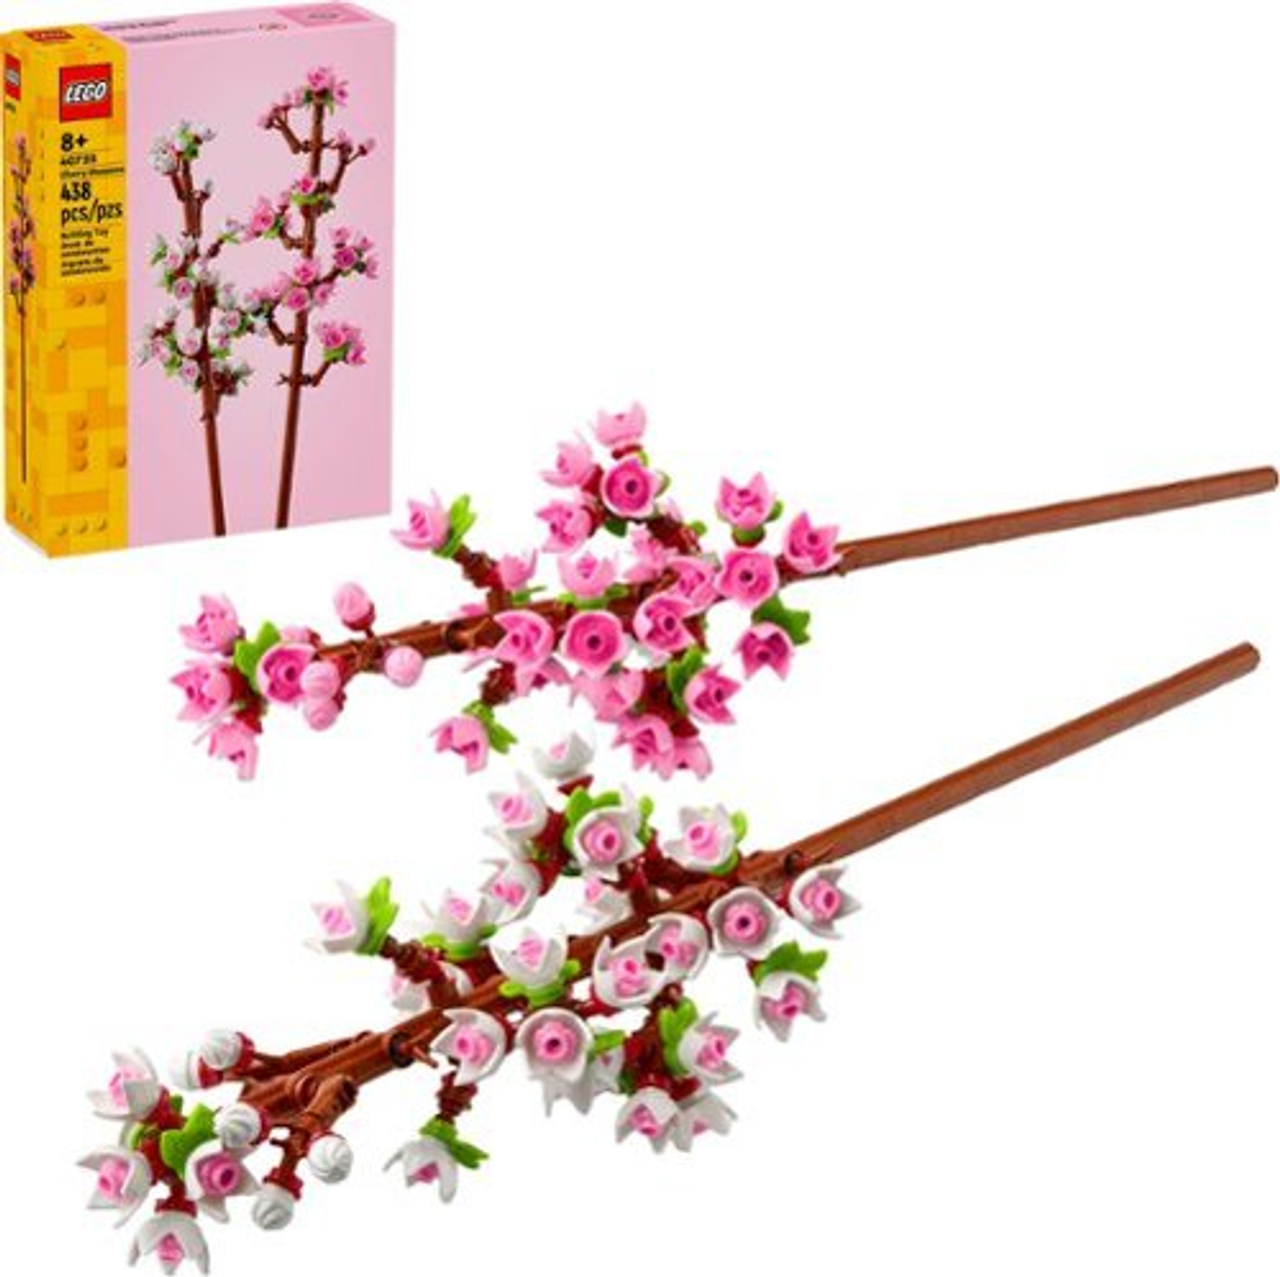 LEGO - Cherry Blossoms Celebration Gift, White and Pink Cherry Blossom 40725